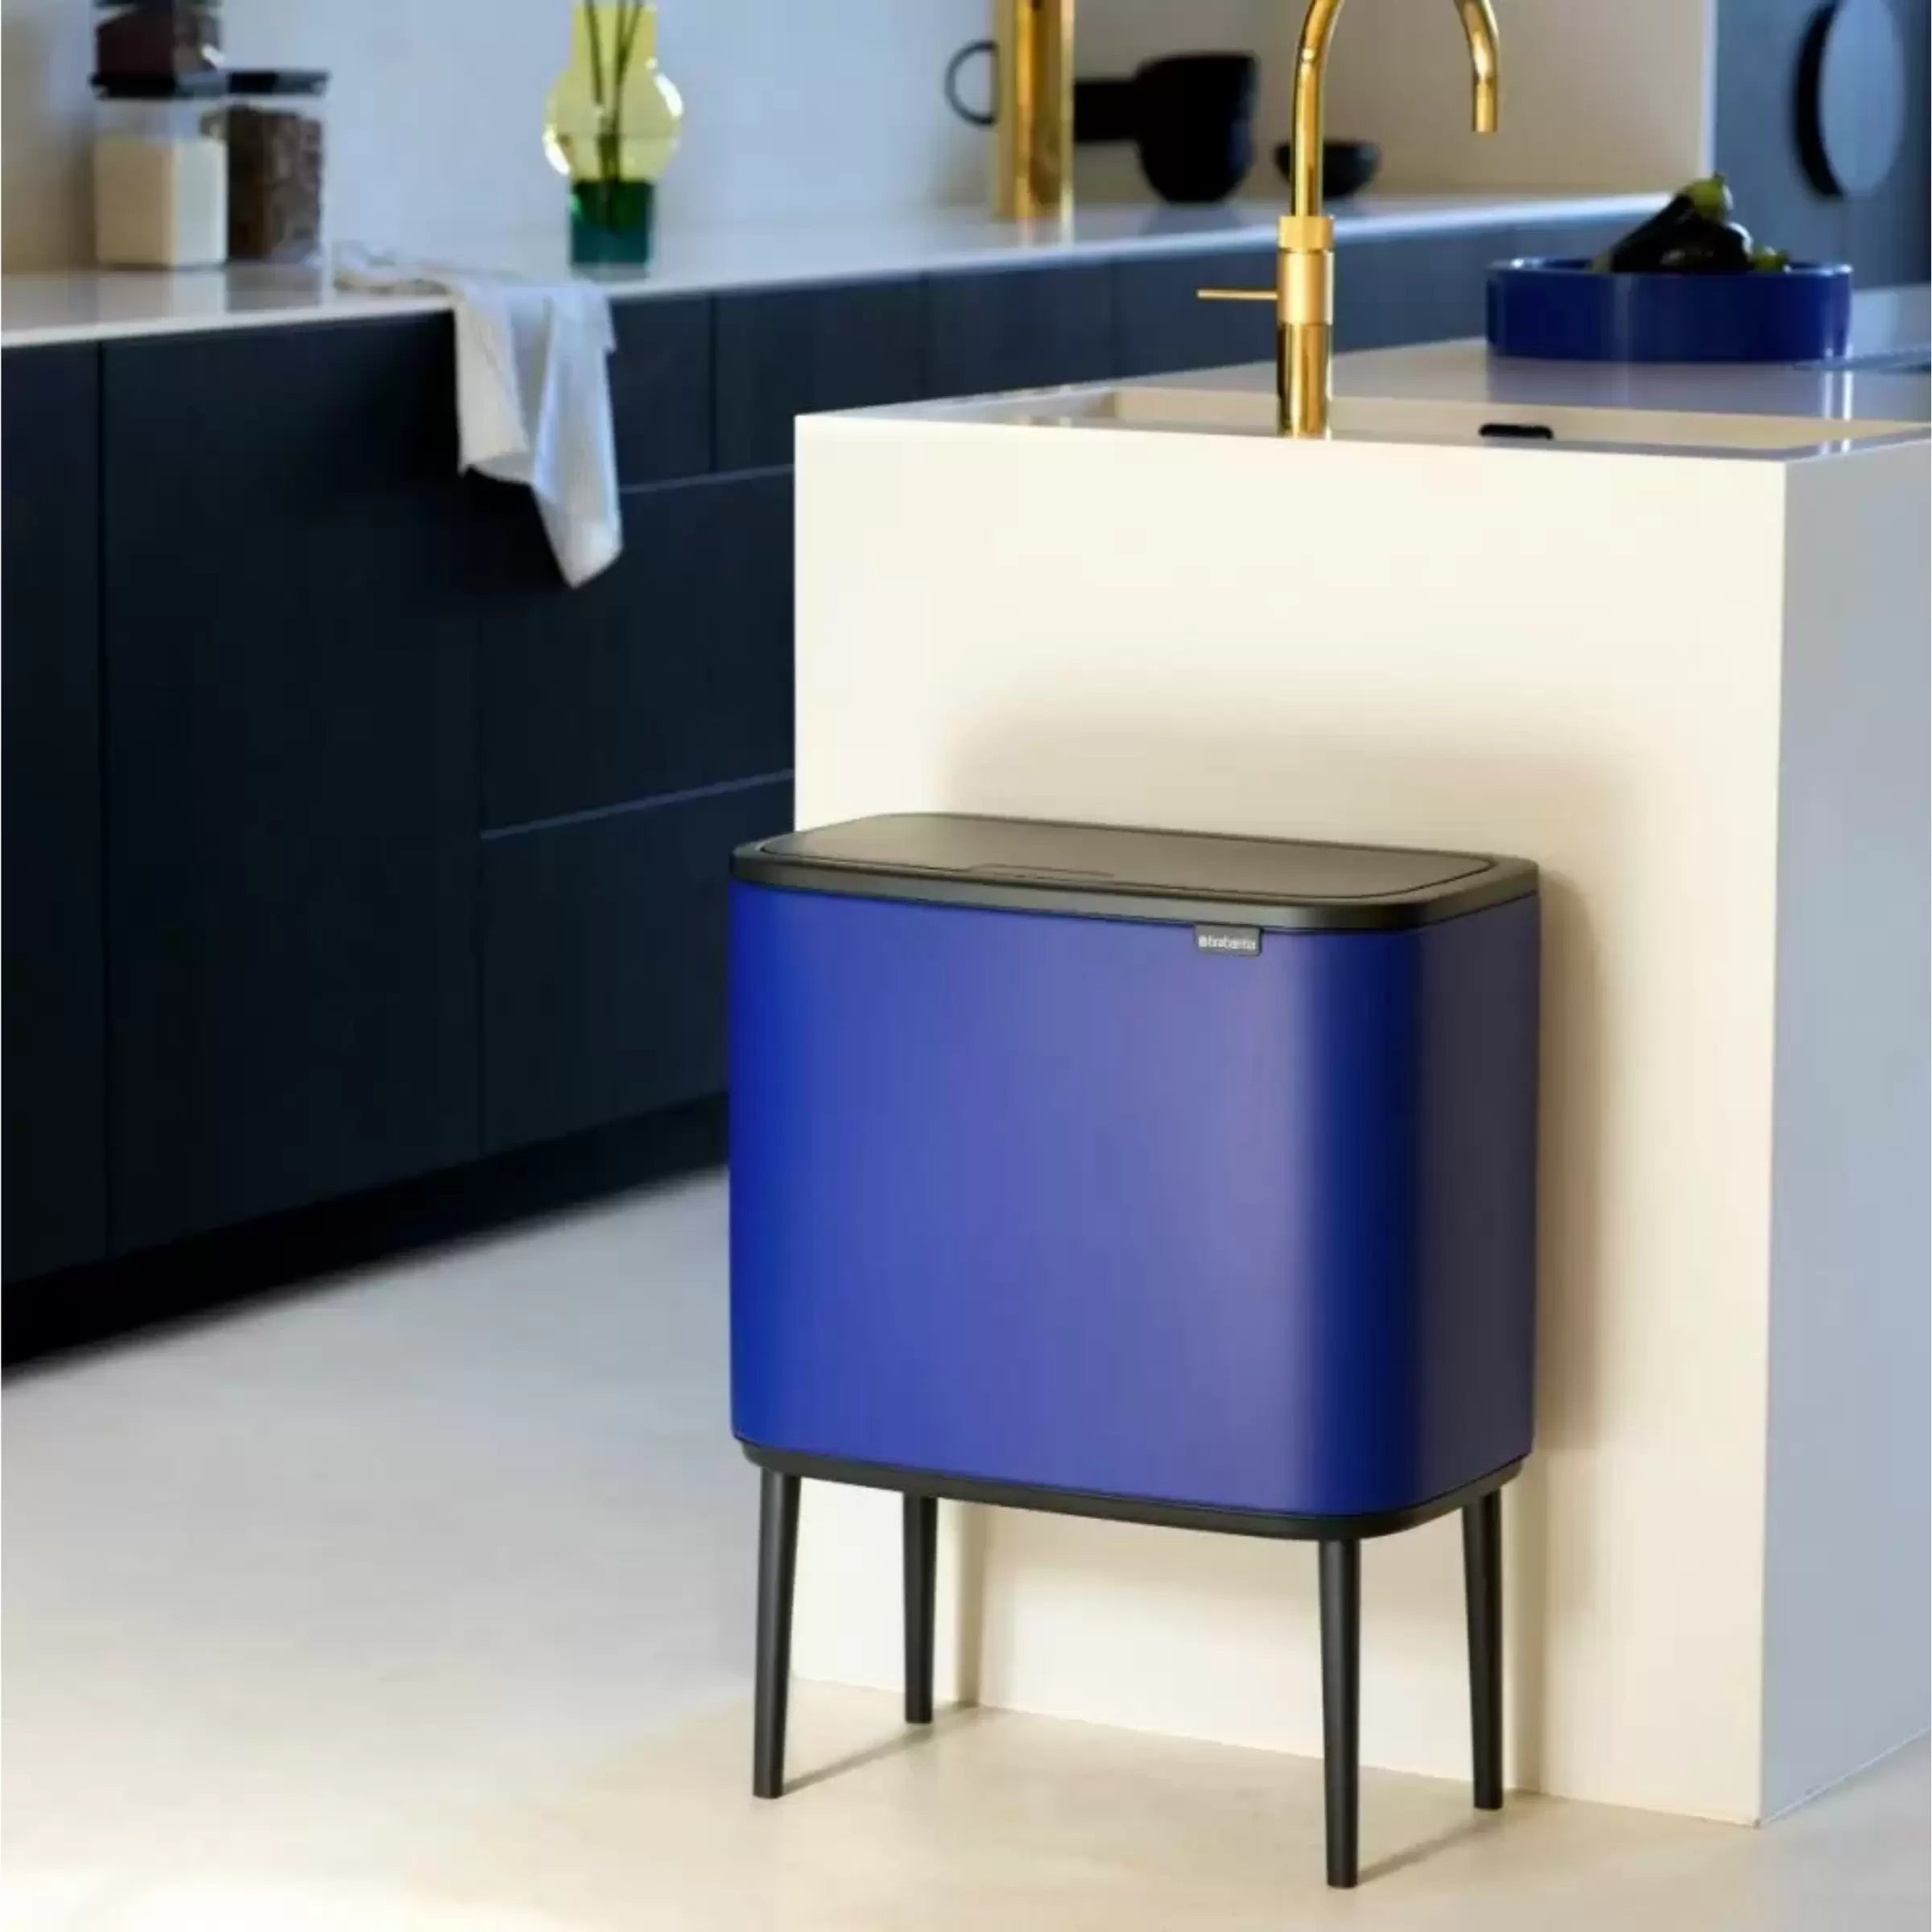 A blue Brabantia bin in a kitchen